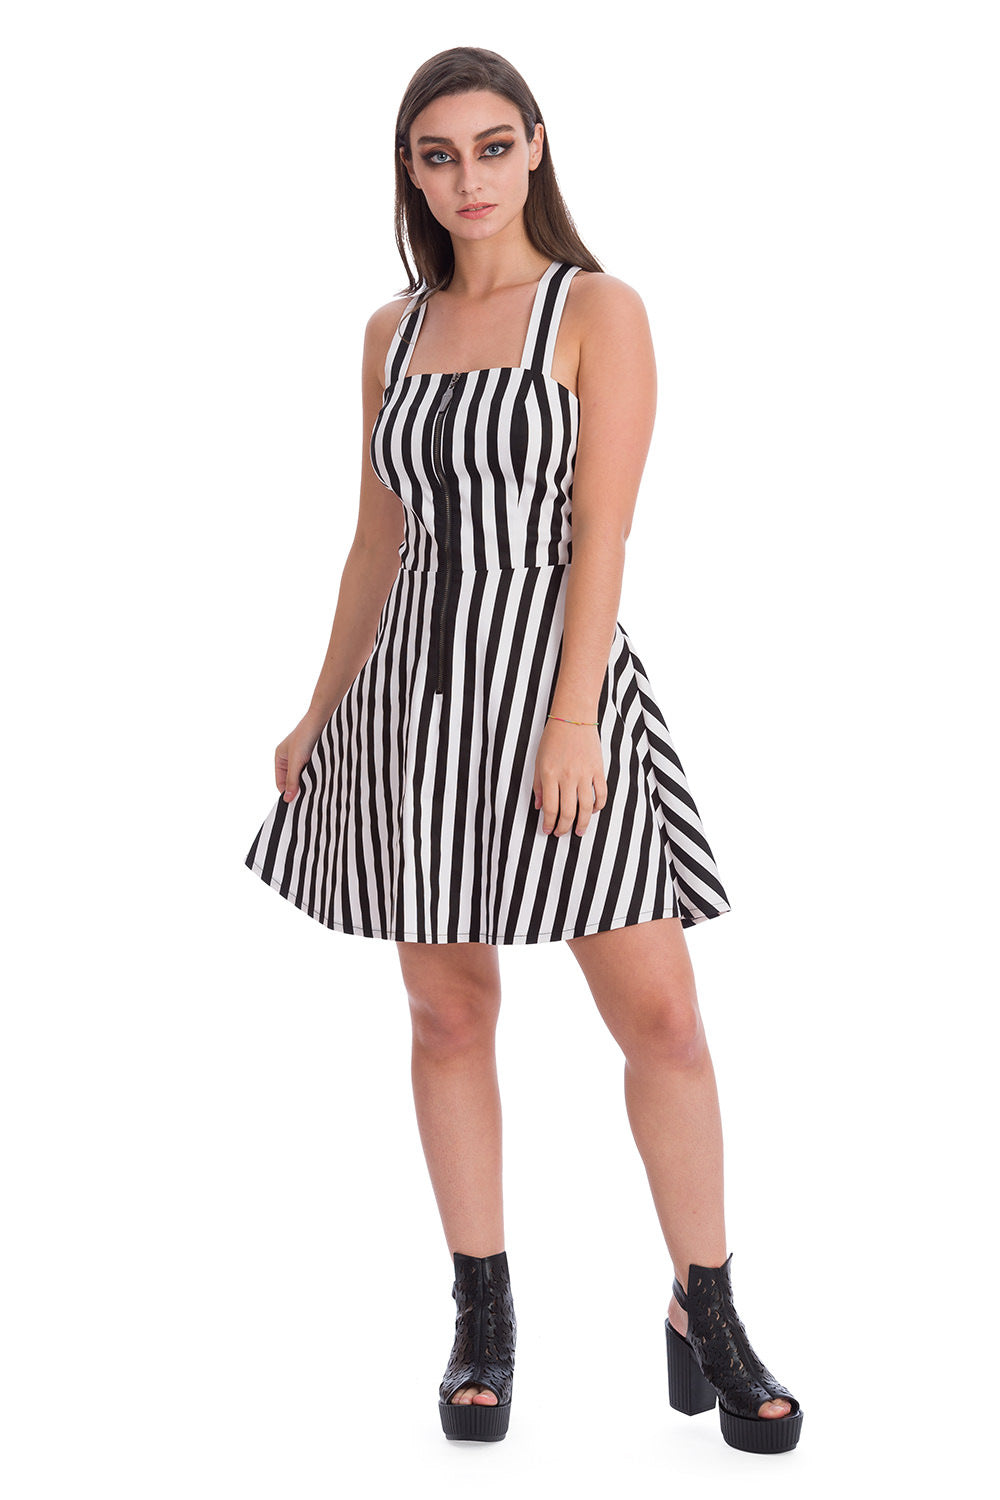 Alternative model wearing a black and white striped strap dress